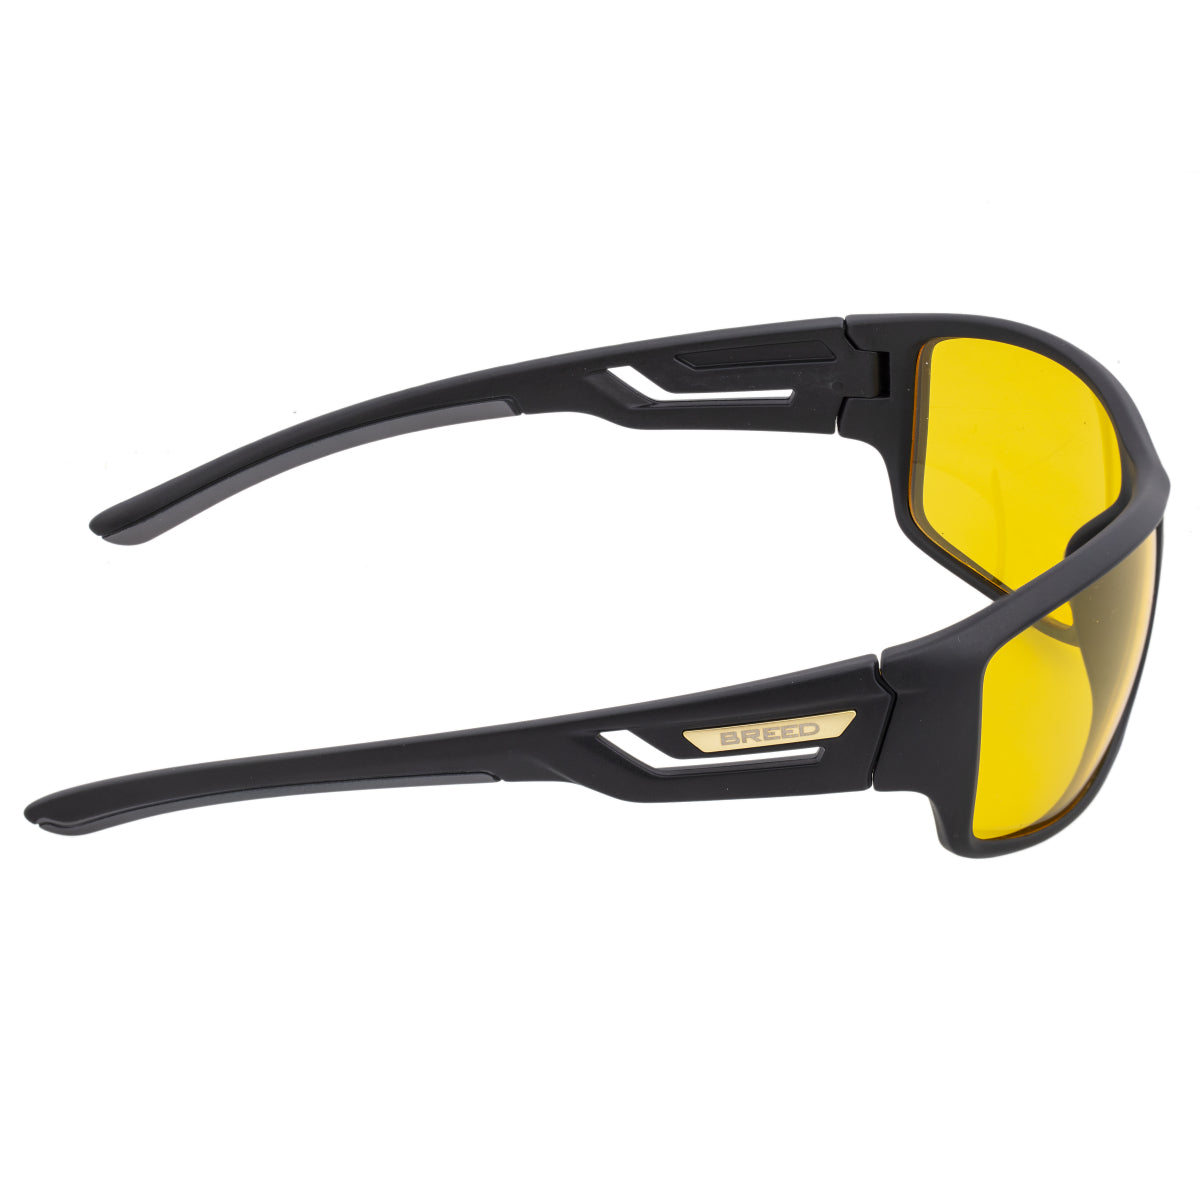 Breed Aquarius Polarized Sunglasses - Black/Yellow - BSG060YL